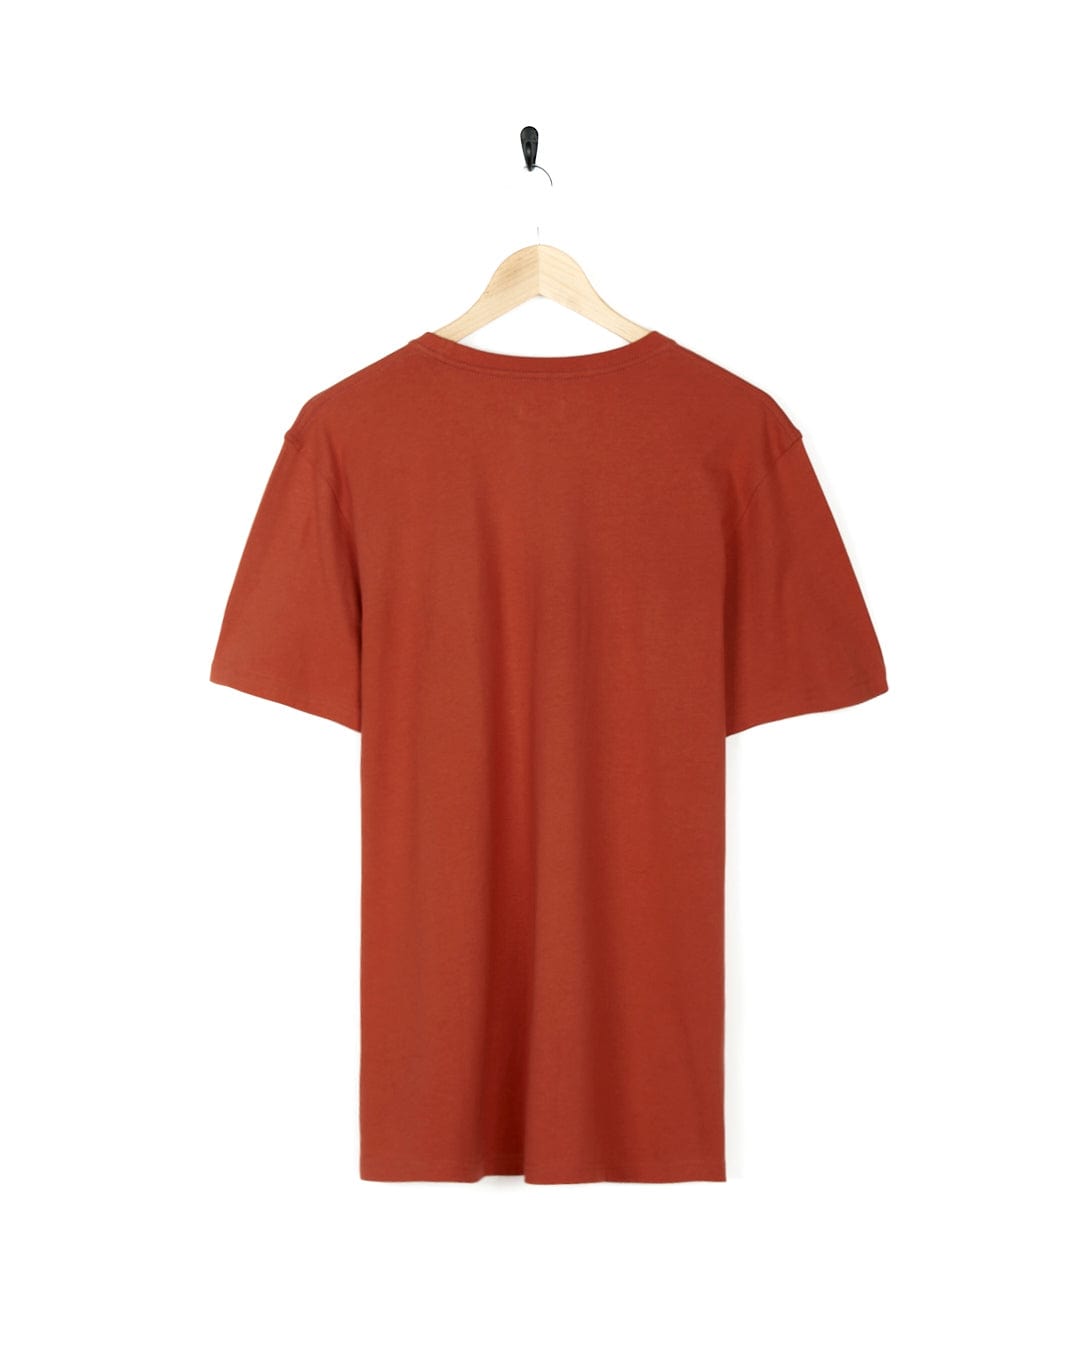 A stylish Saltrock Wood Carve Logo - Mens Short Sleeve T-Shirt - Red hanging on a wooden hanger.